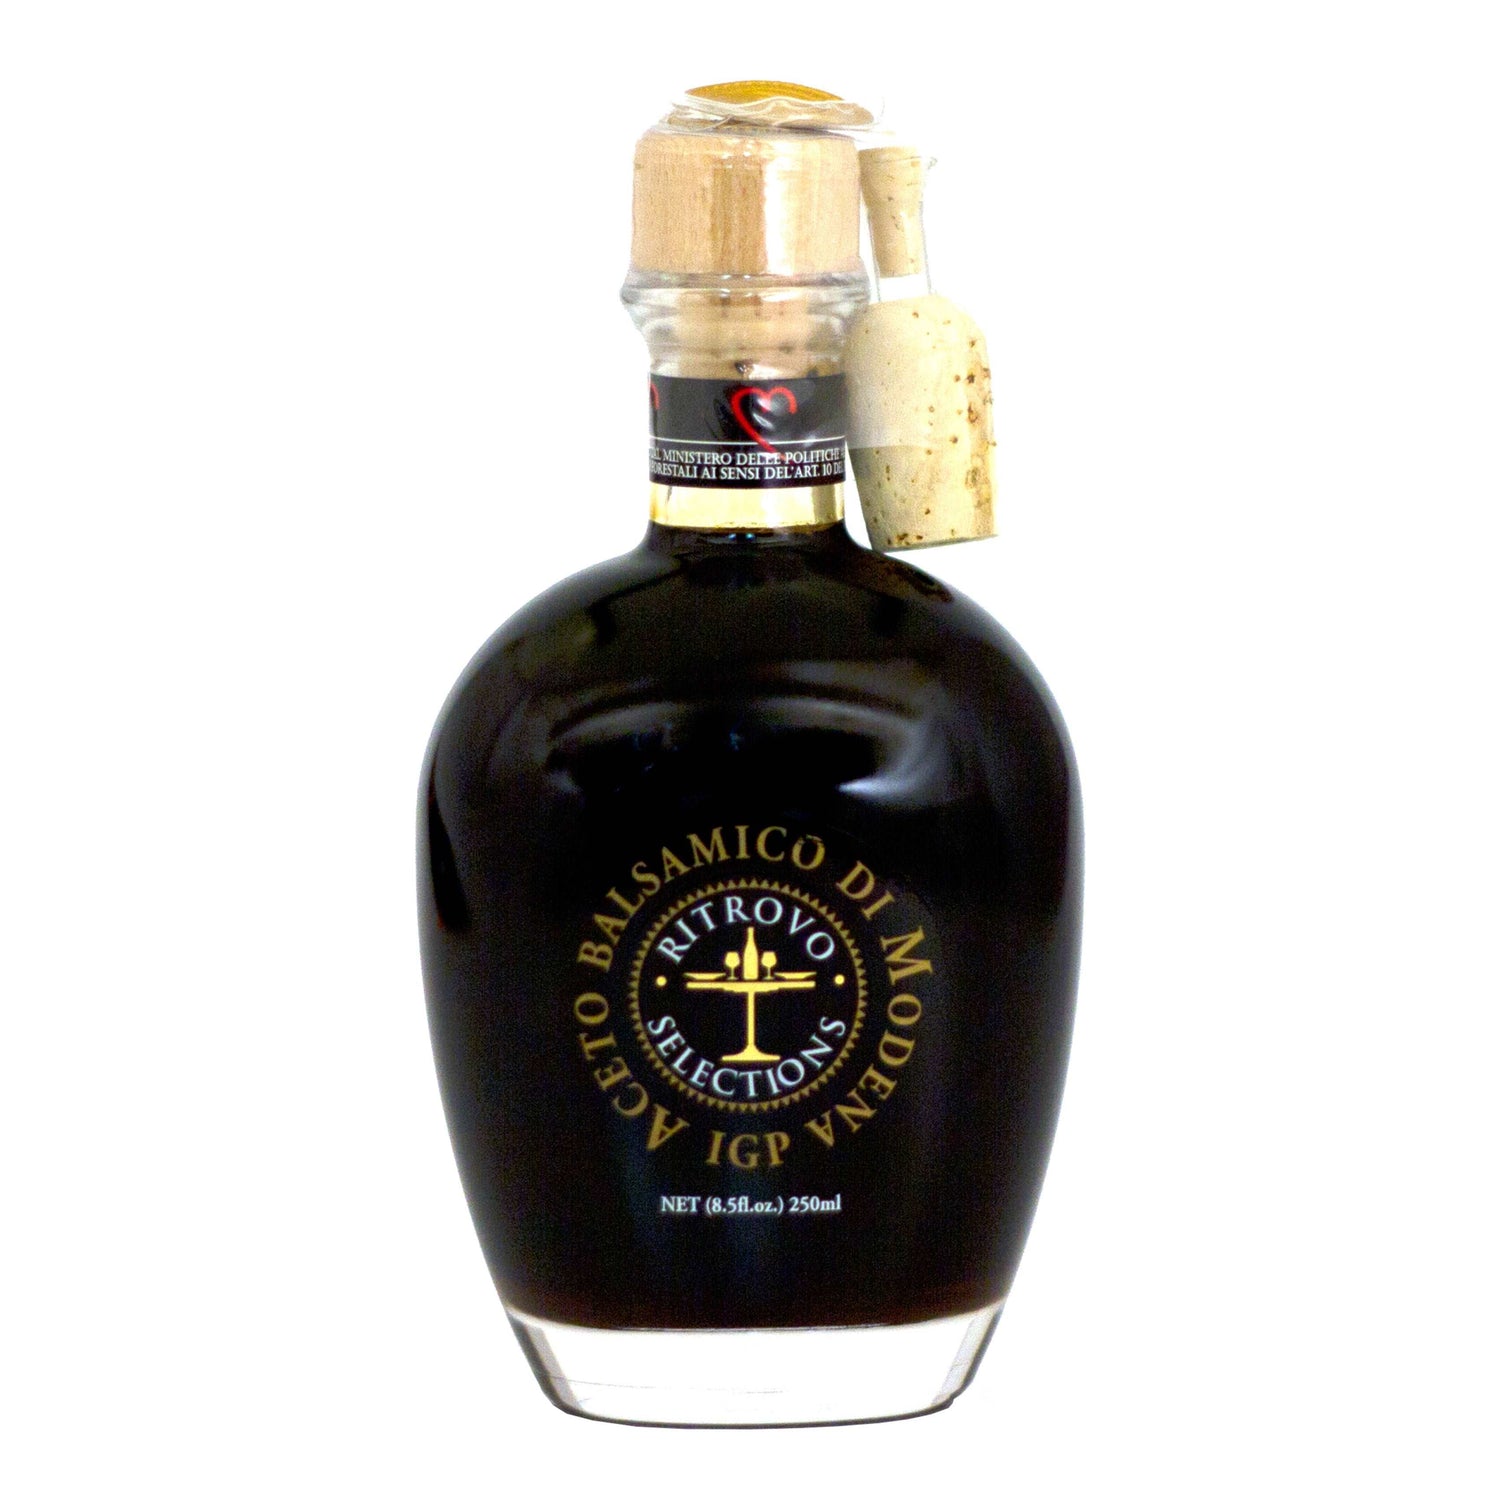 Ritrovo Selections Maletti IGP Aged Balsamic Vinegar